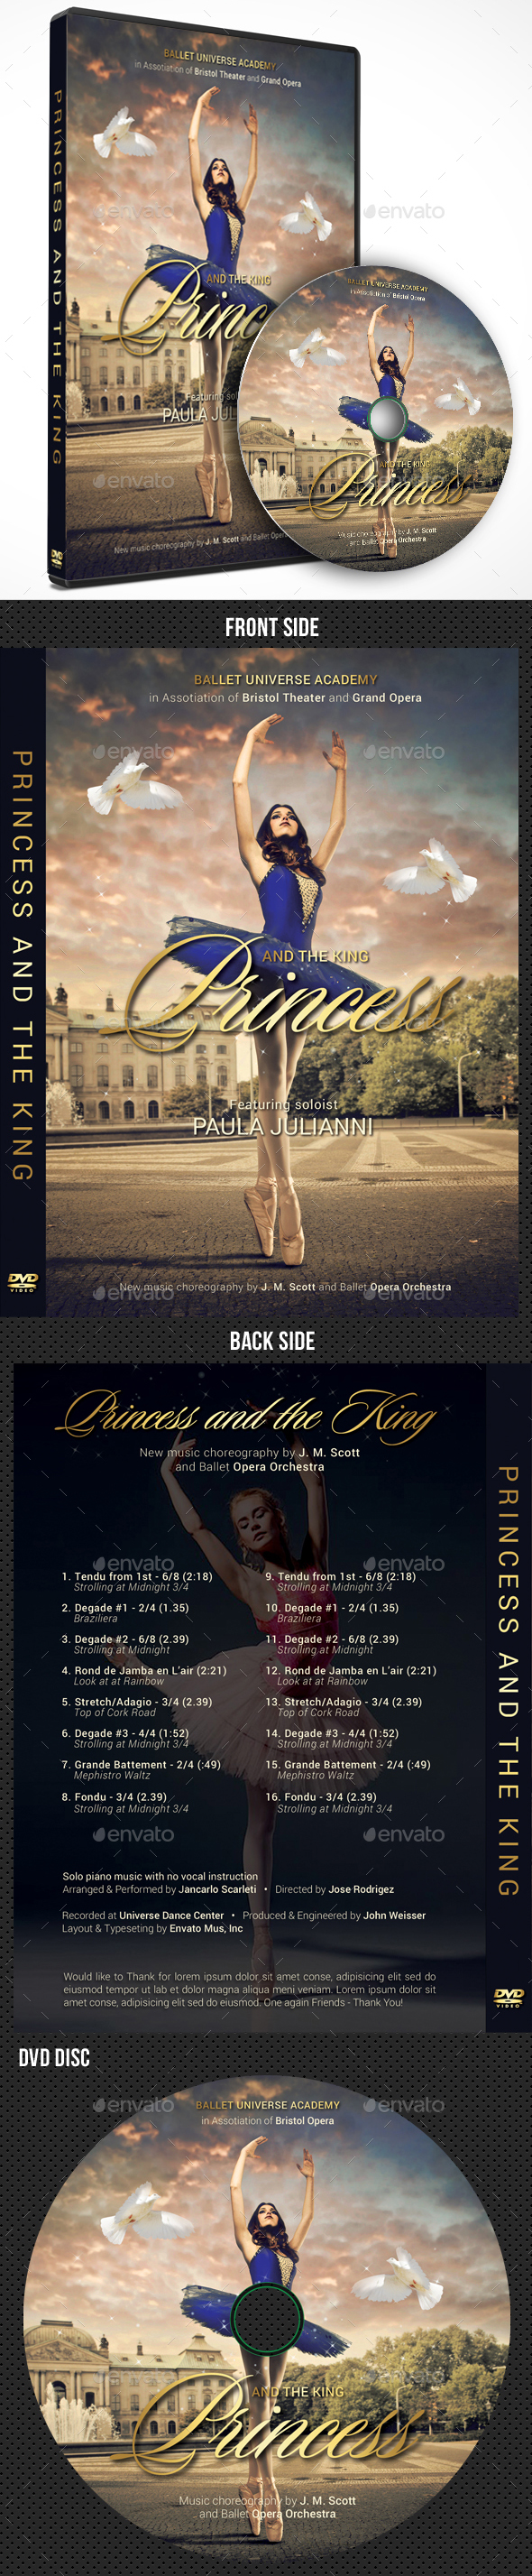 Ballet DVD Cover Template Premium